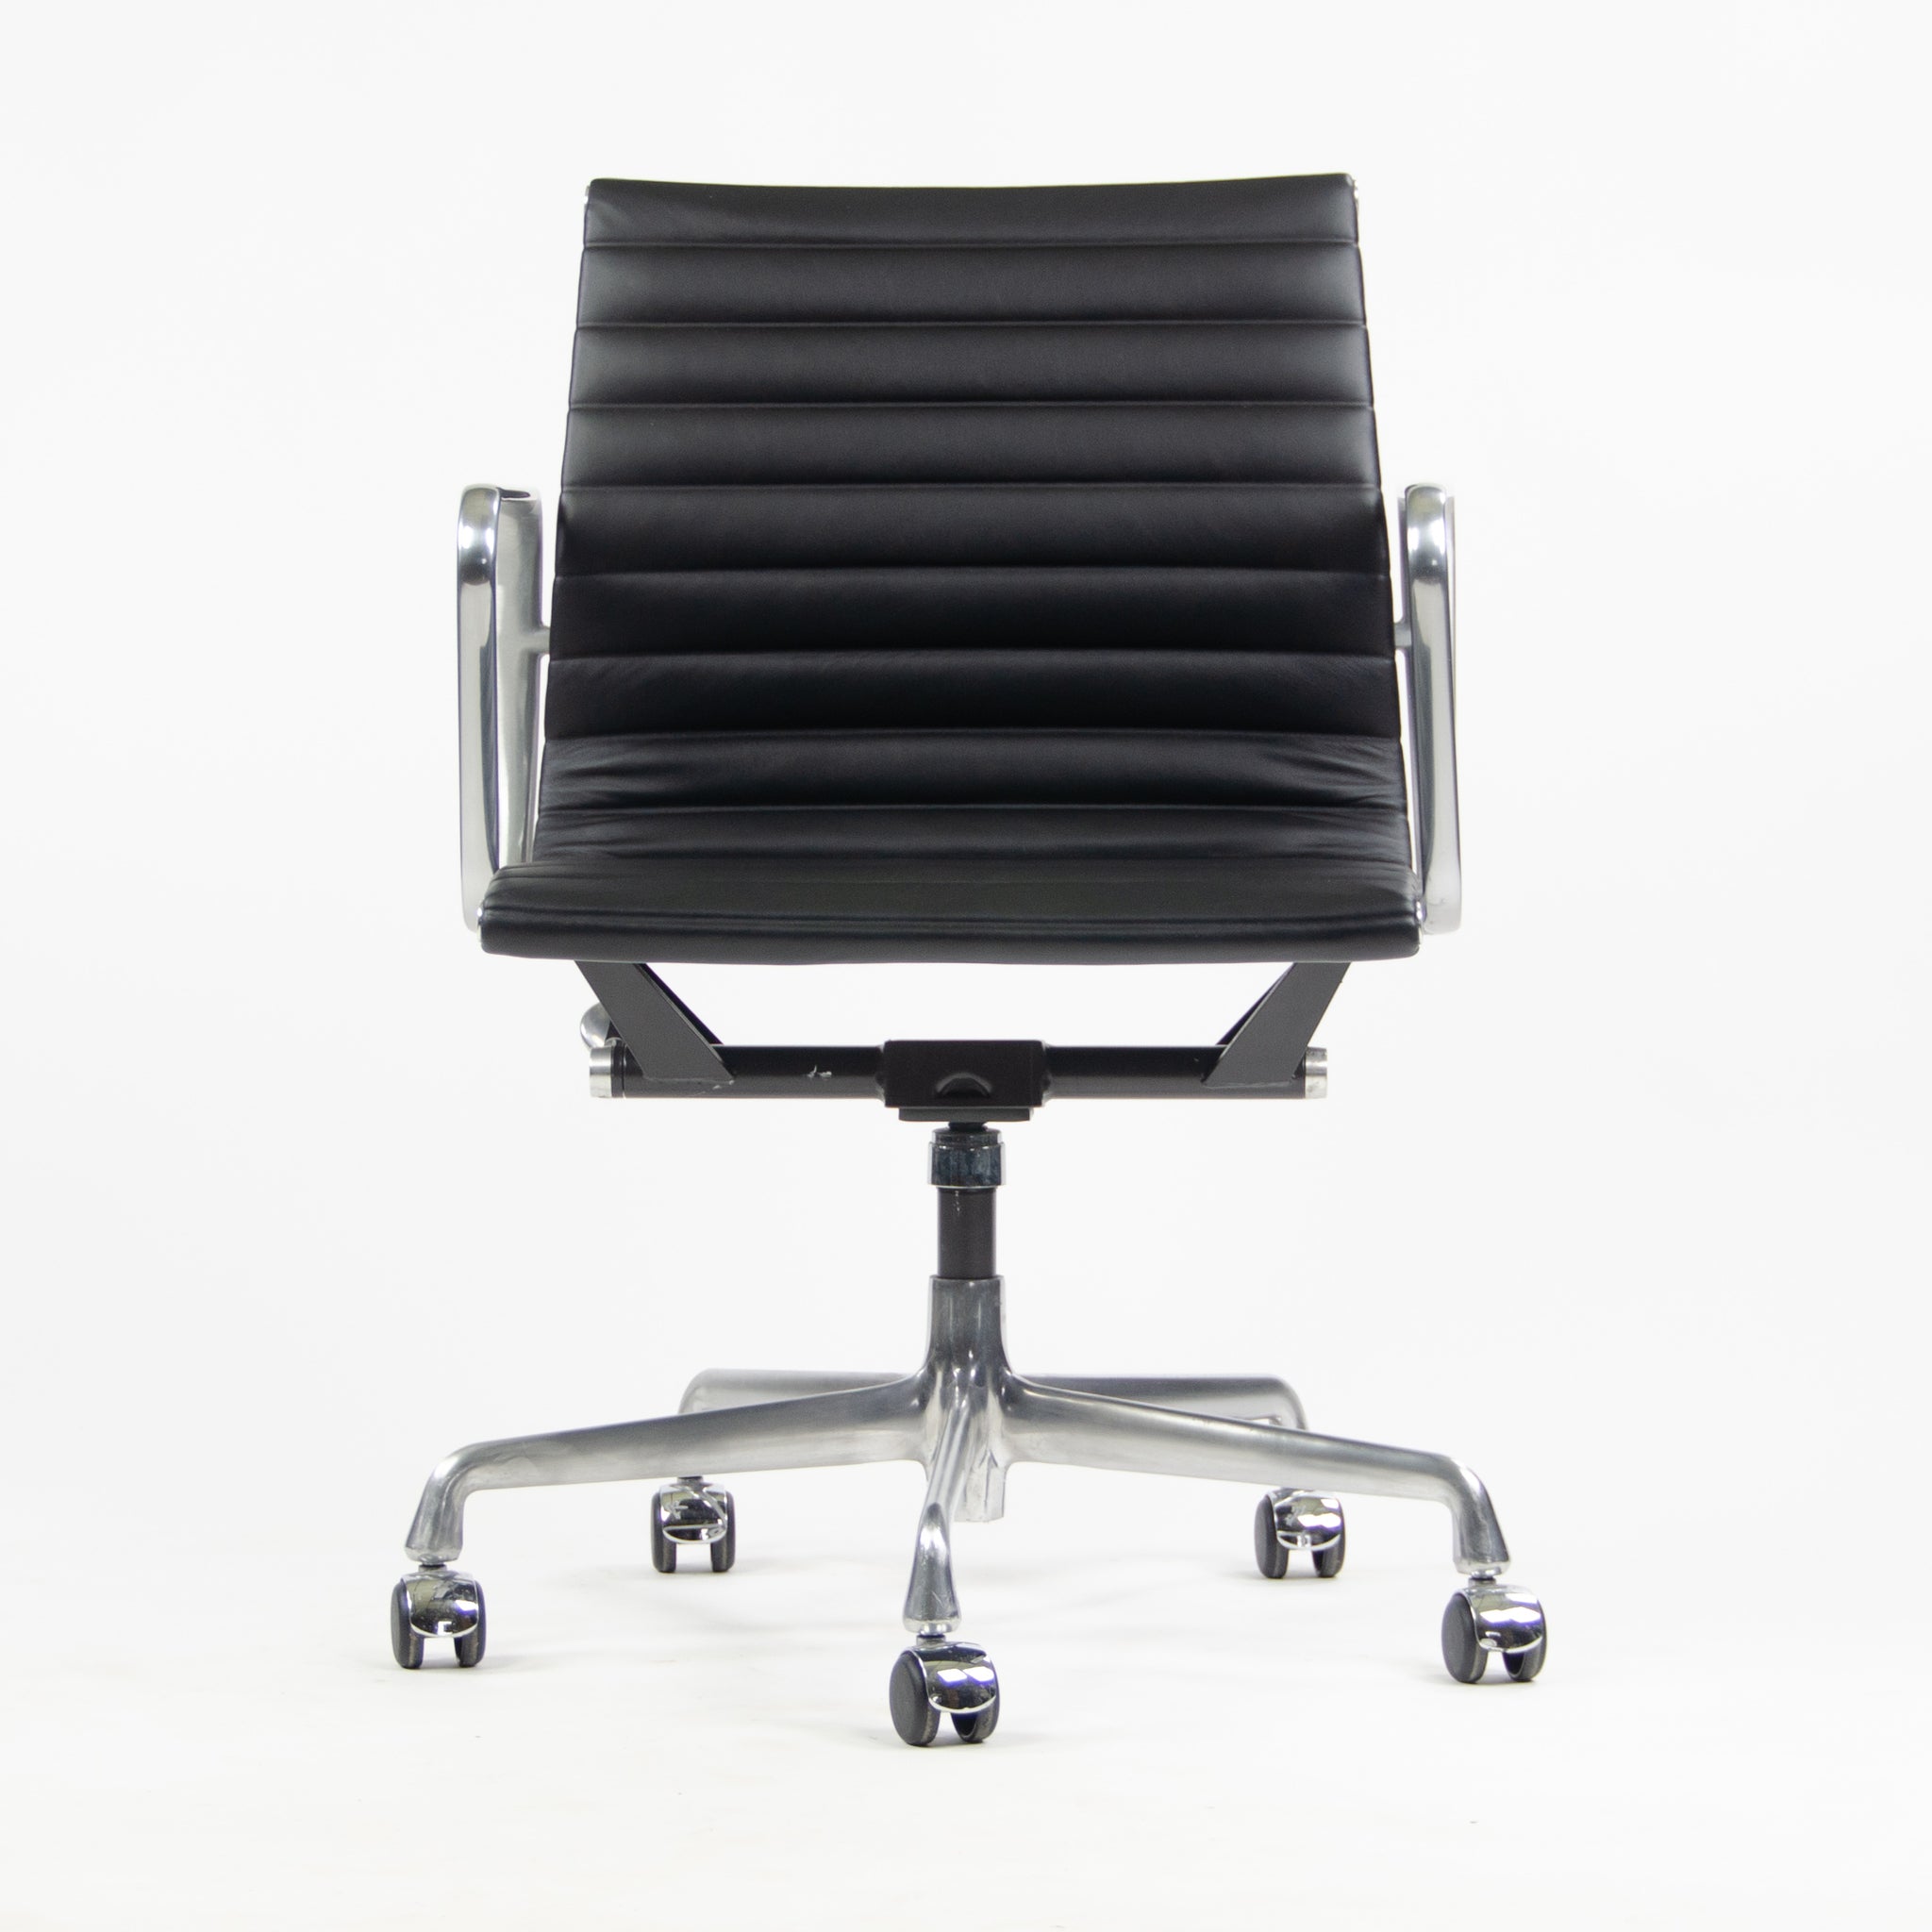 SOLD Eames Herman Miller Low Aluminum Group Management Desk Chair Black Leather